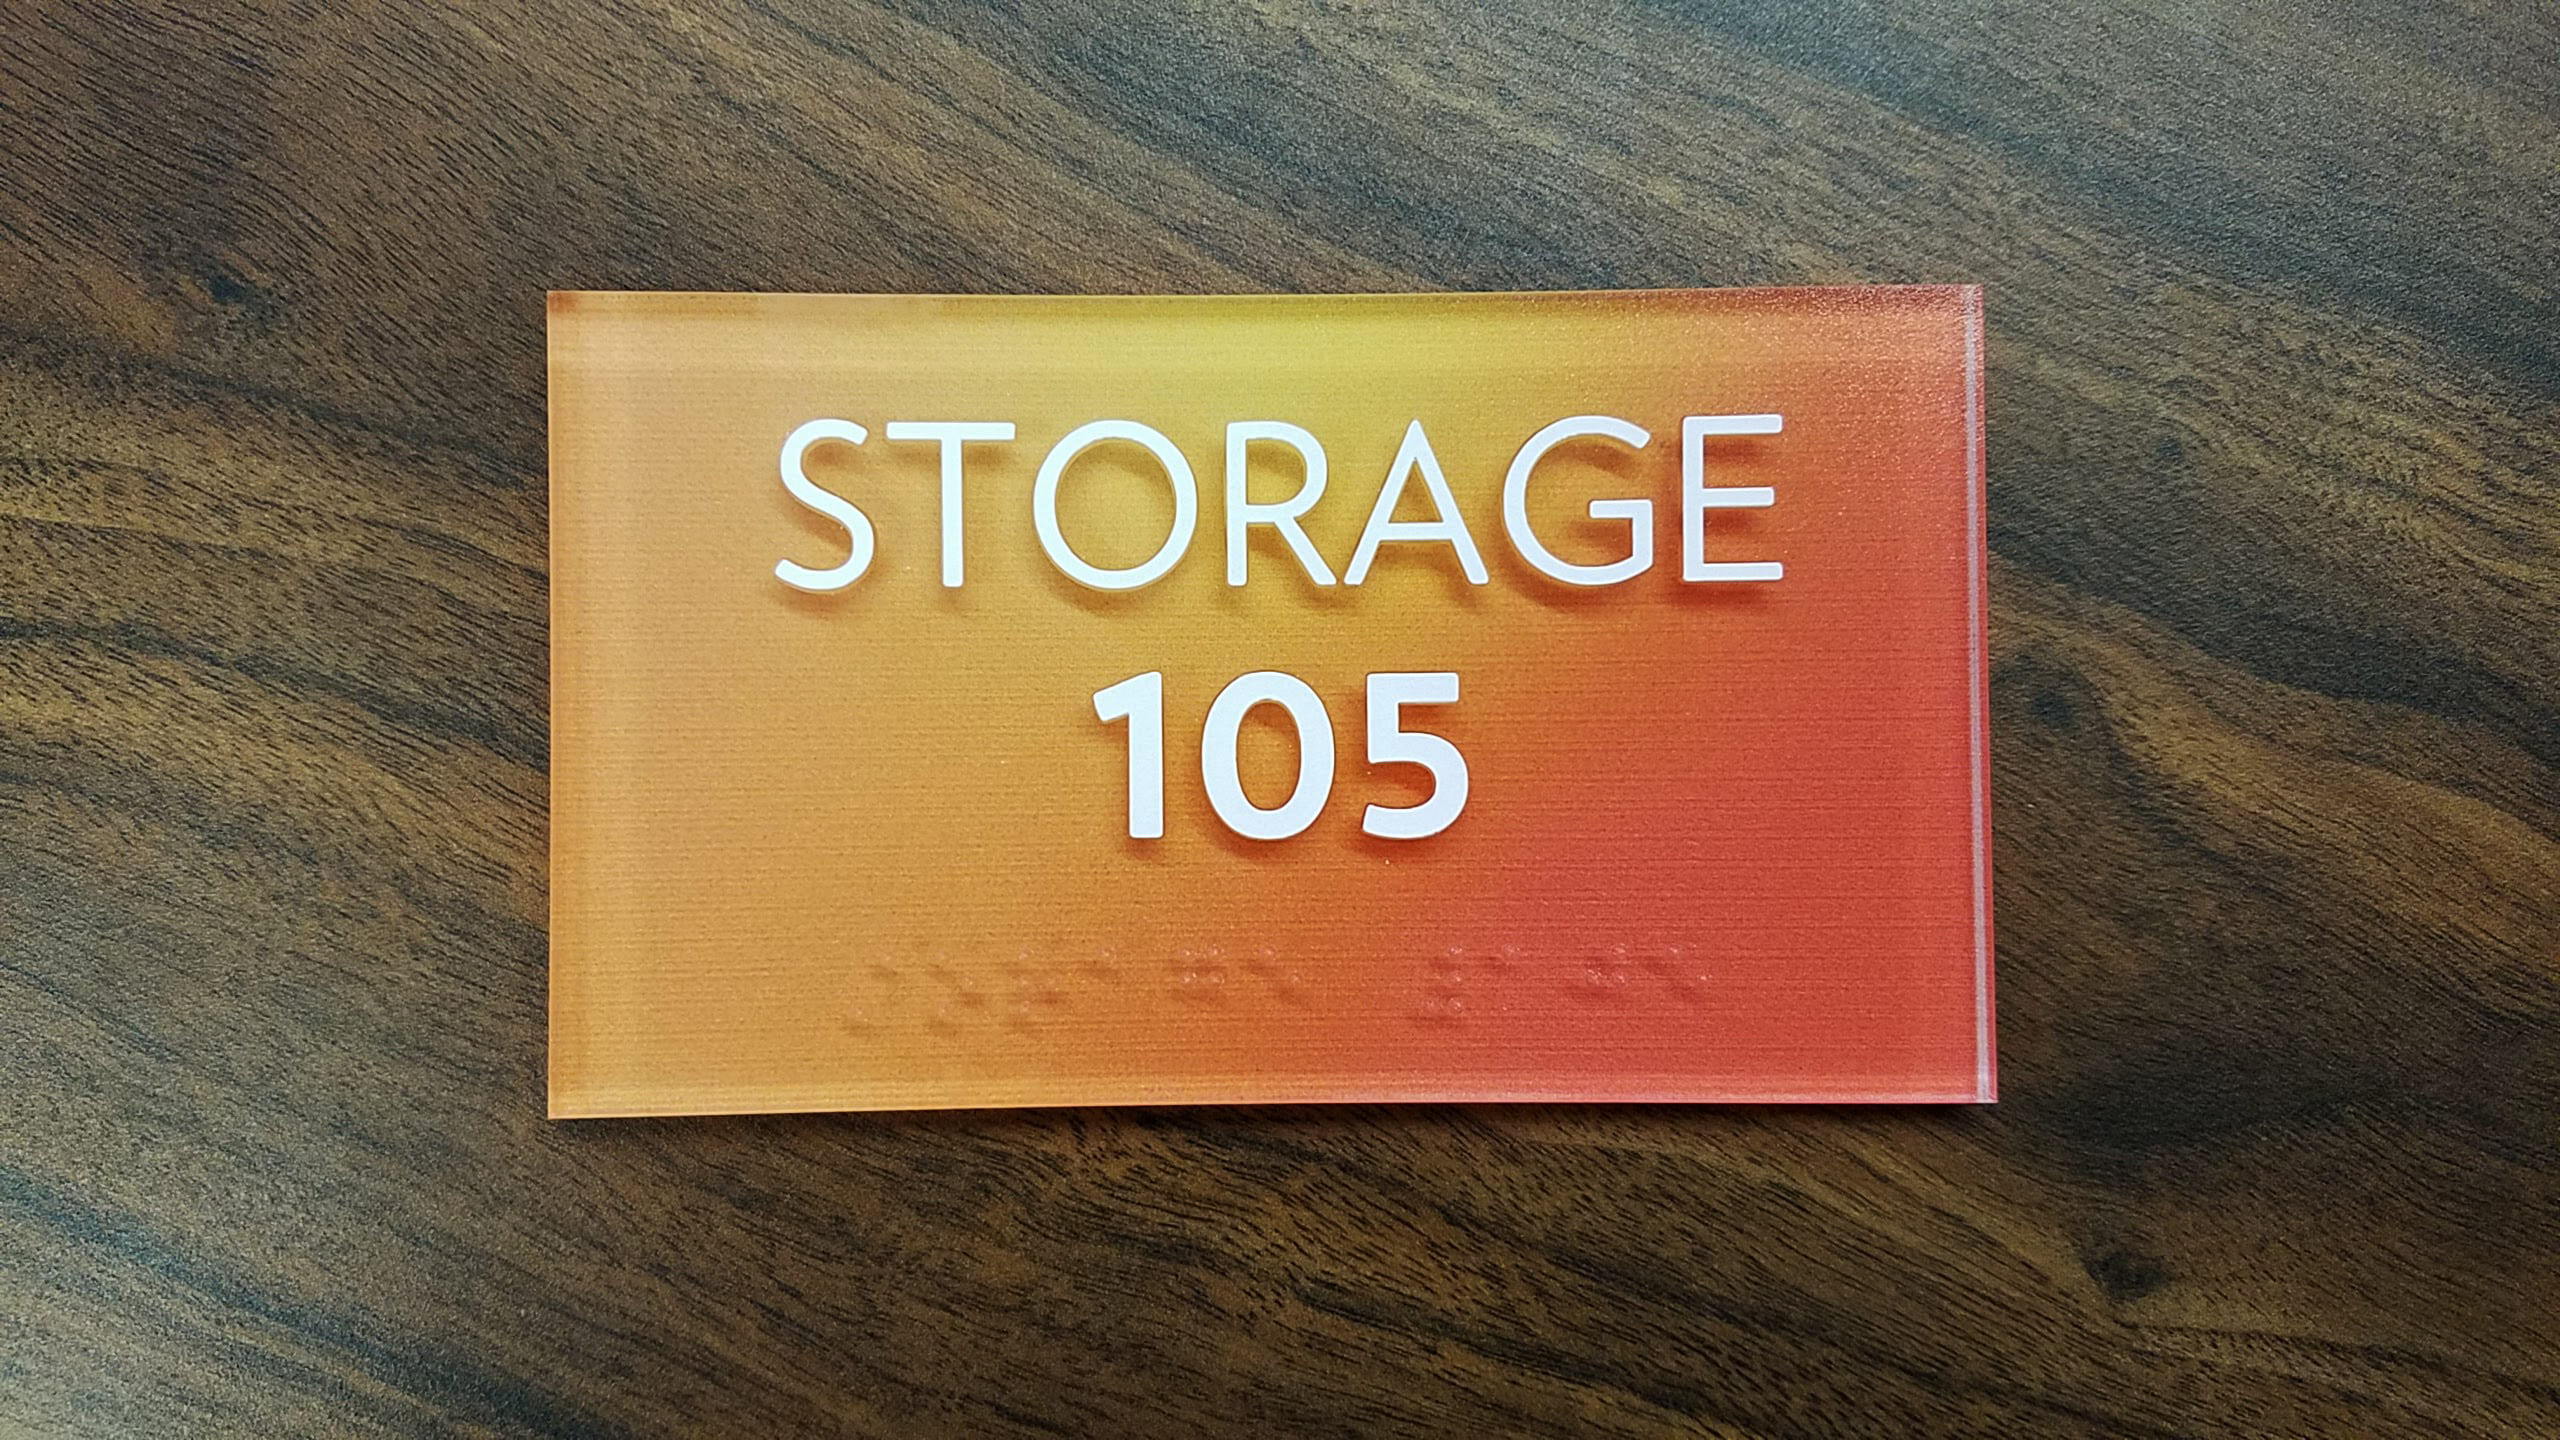 Room 105 storage ada compliant sign